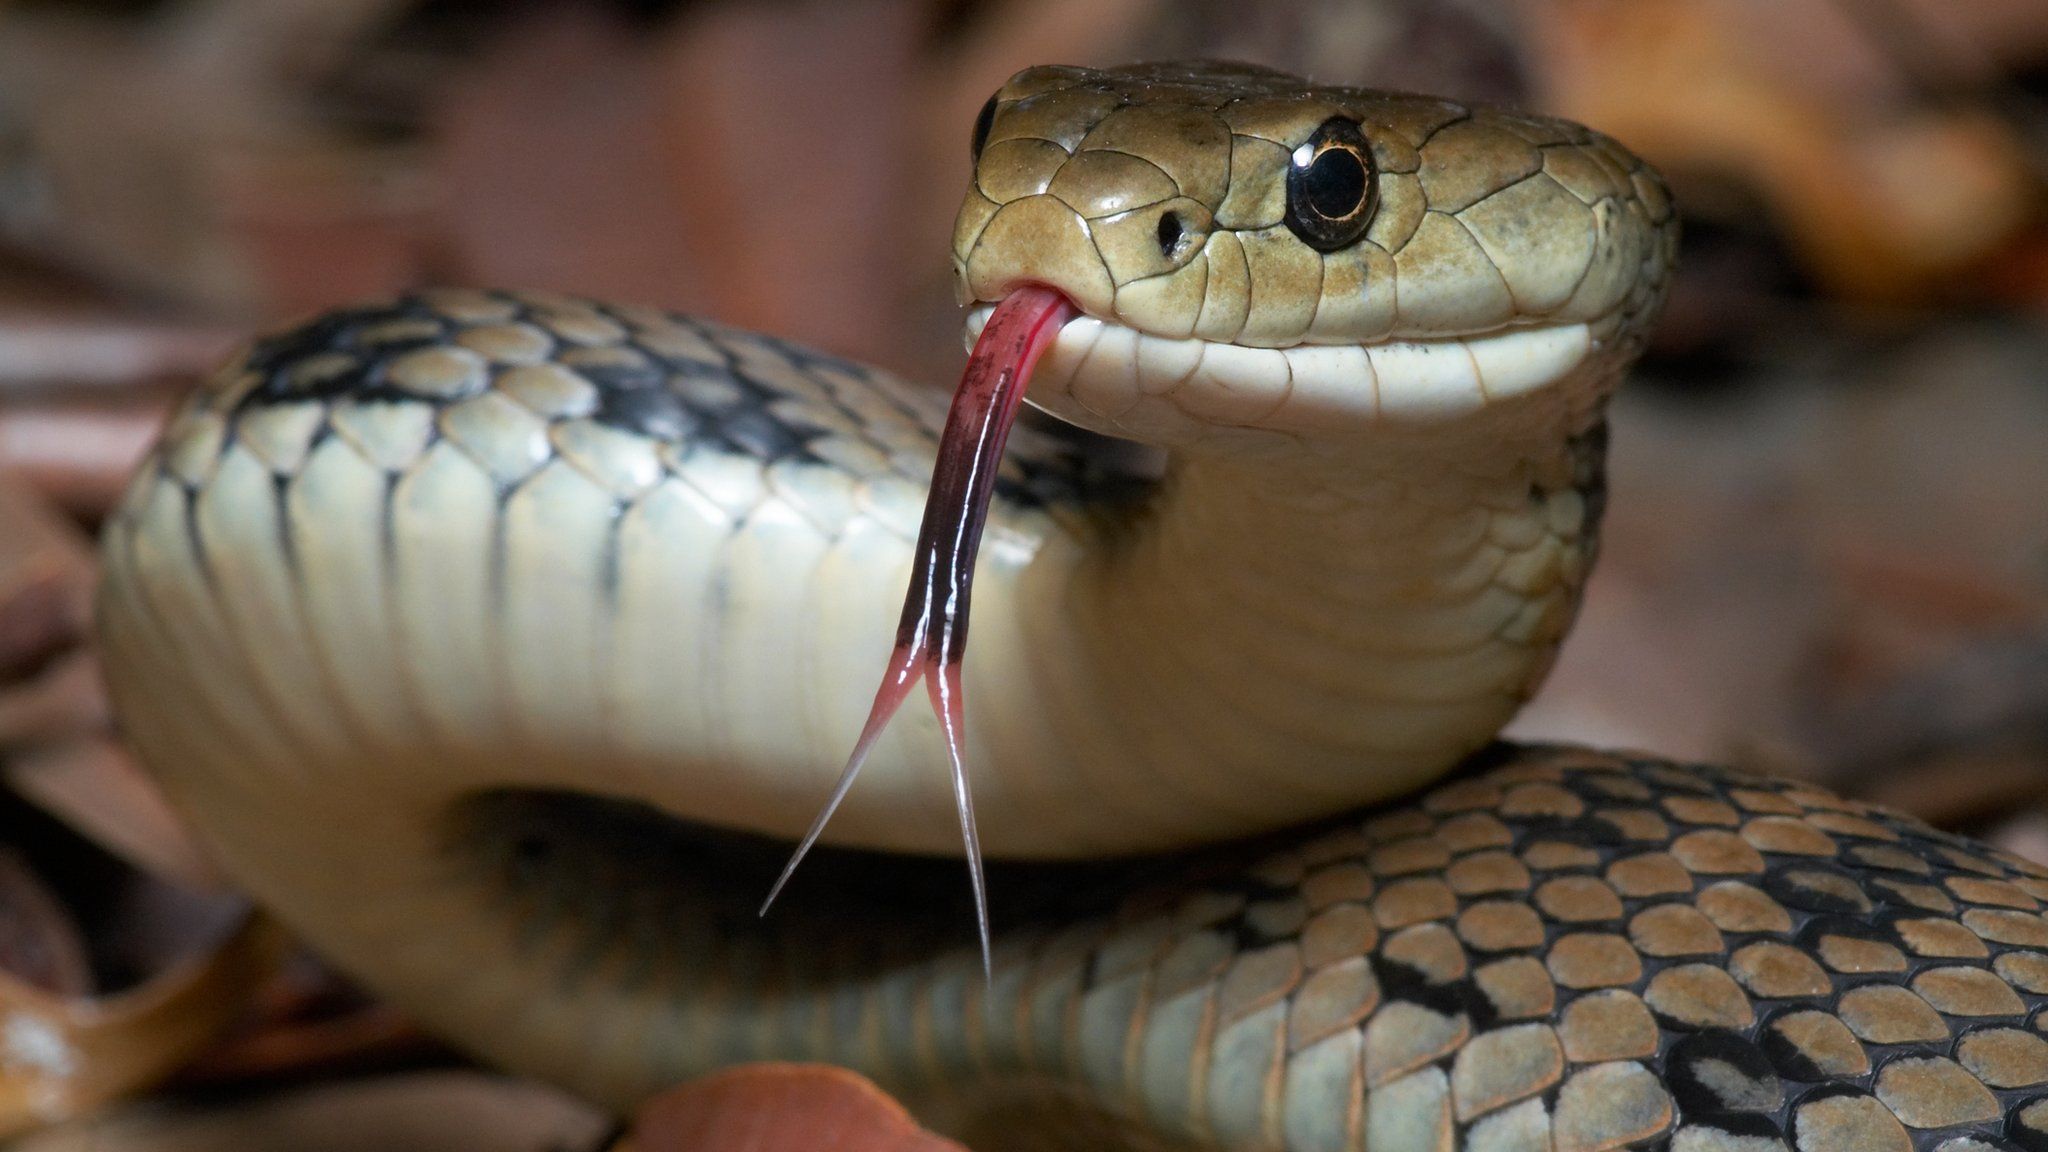 A venomous Australian Rough Scaled snake